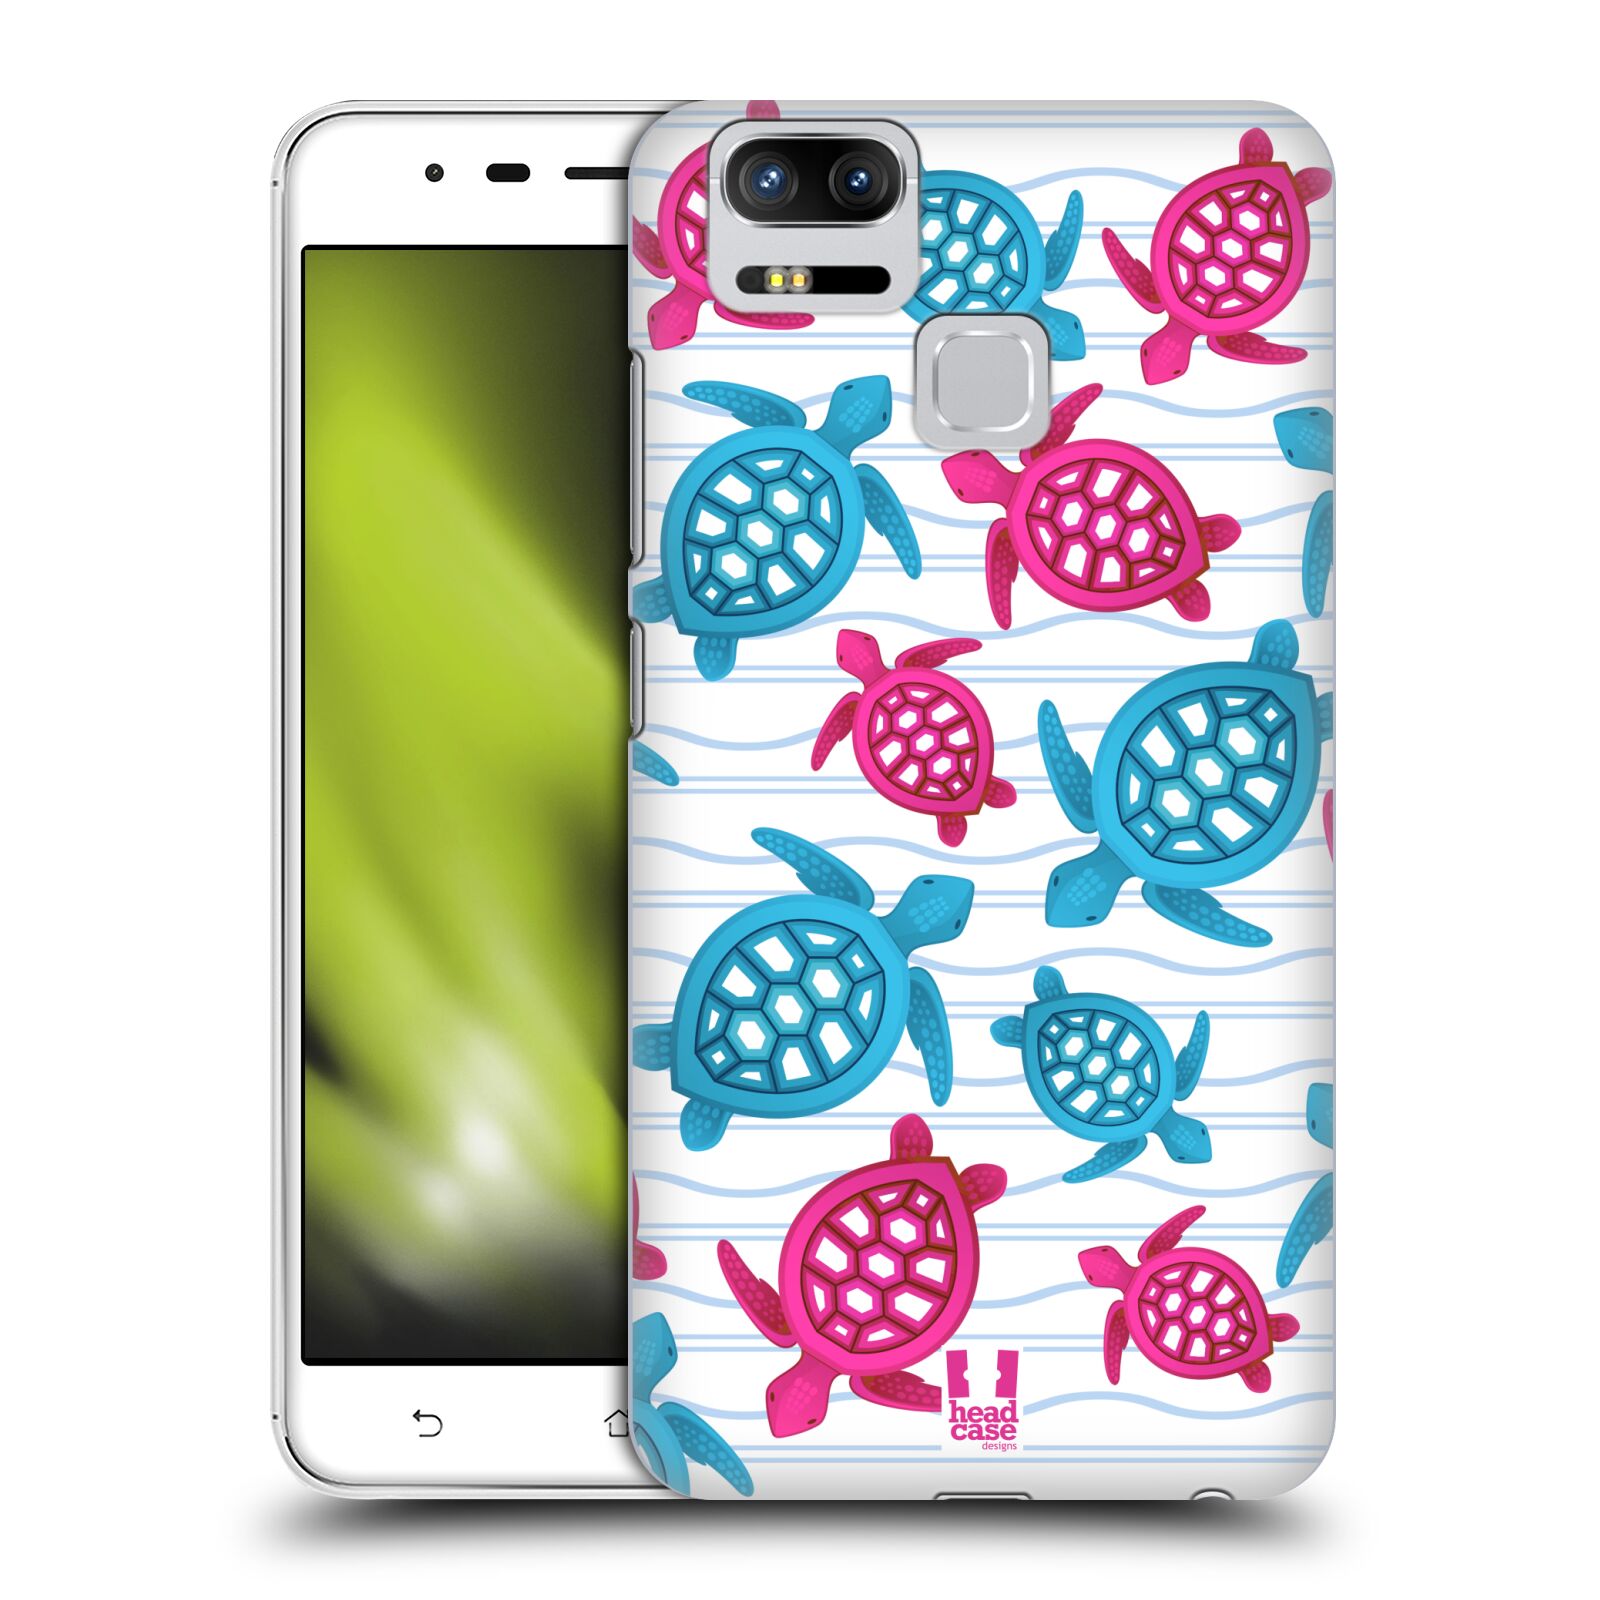 HEAD CASE plastový obal na mobil Asus Zenfone 3 Zoom ZE553KL vzor mořský živočich želva modrá a růžová